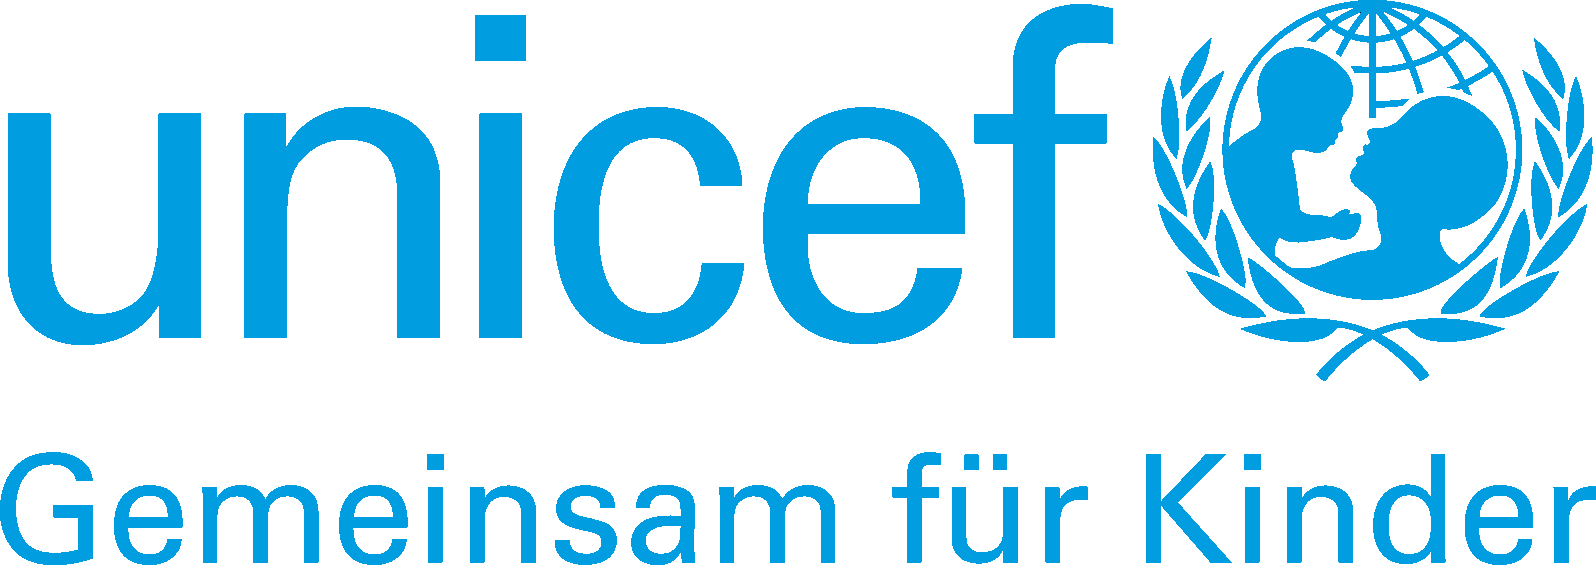 Sponsoren_Unicef